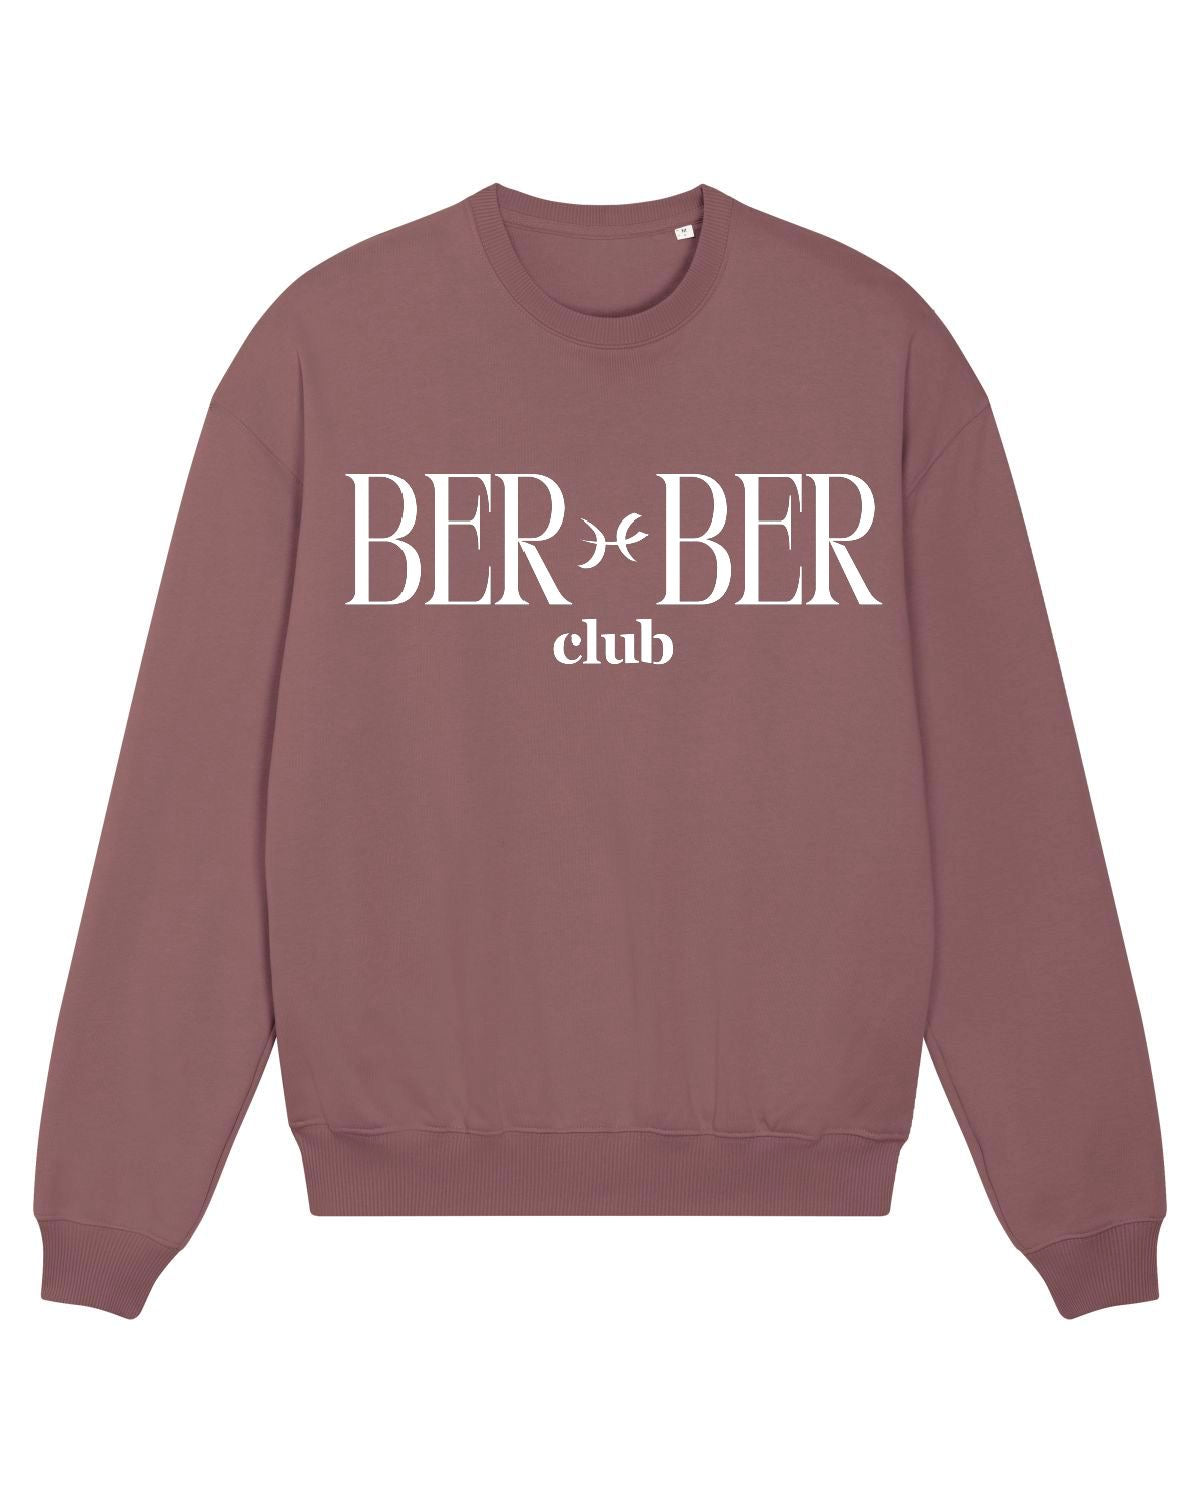 Pull oversize « Berber Club » - Ghazel Boutique